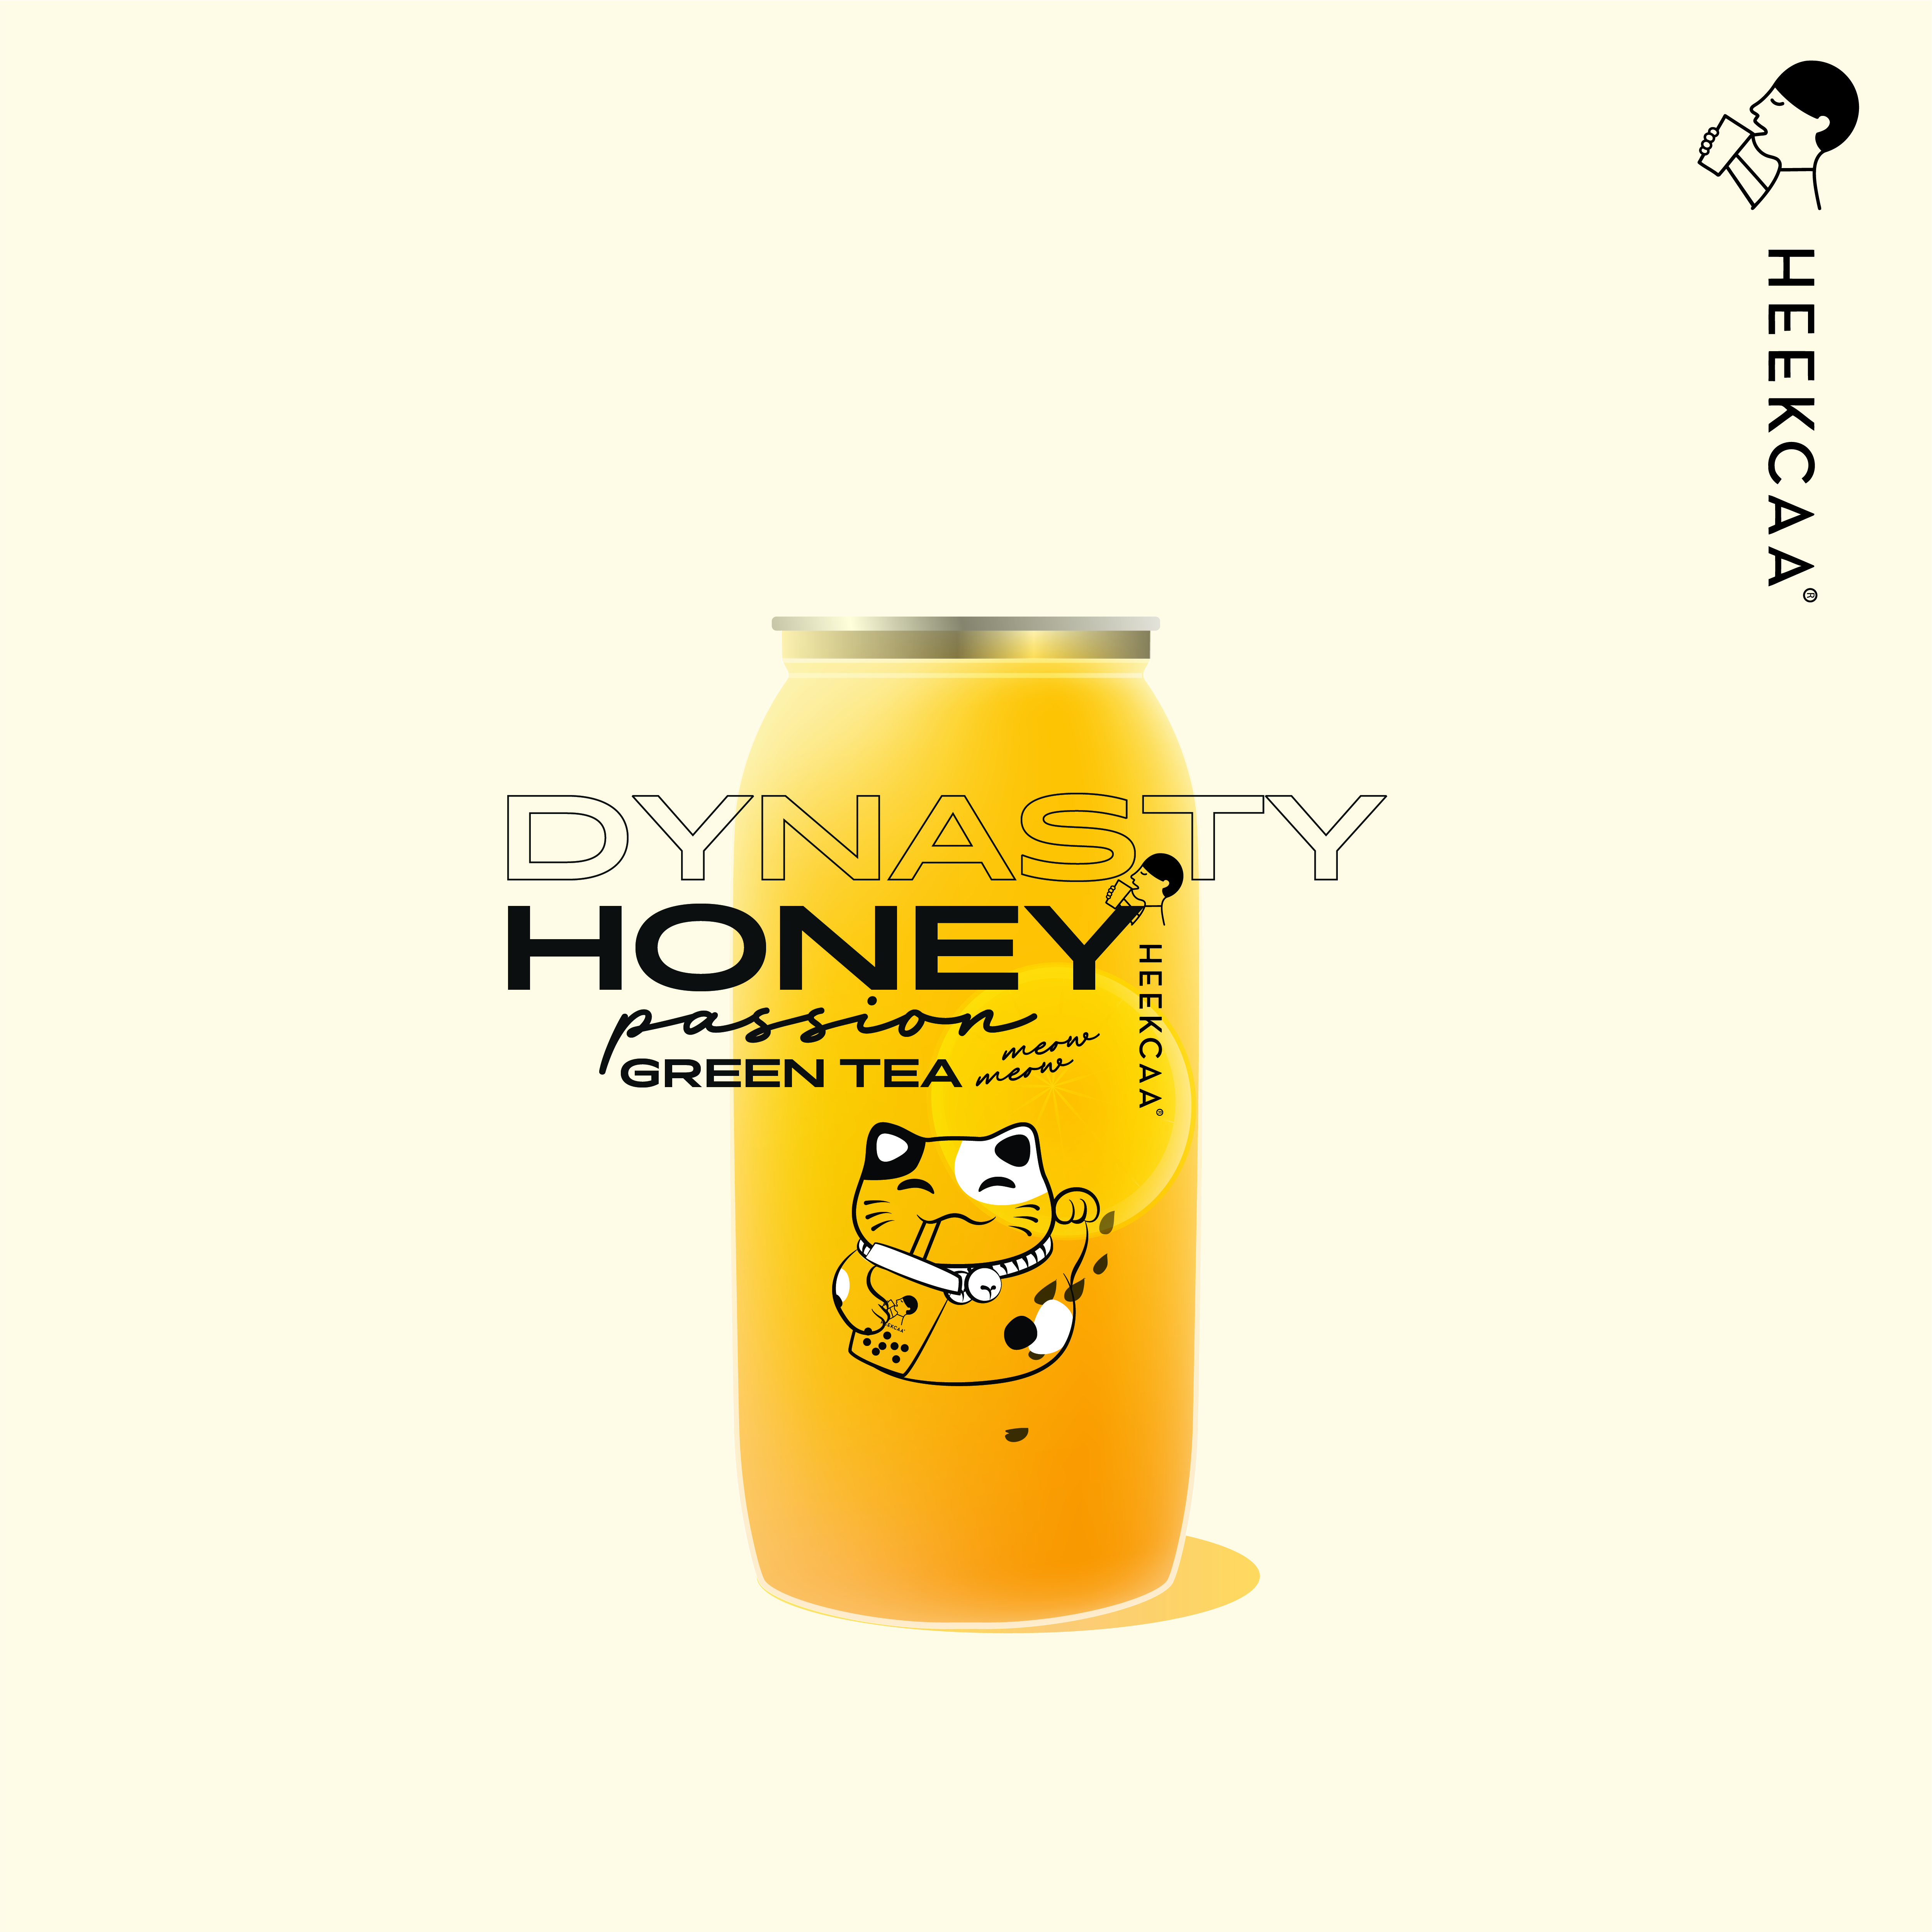 Dynasty Honey Passion Green Tea